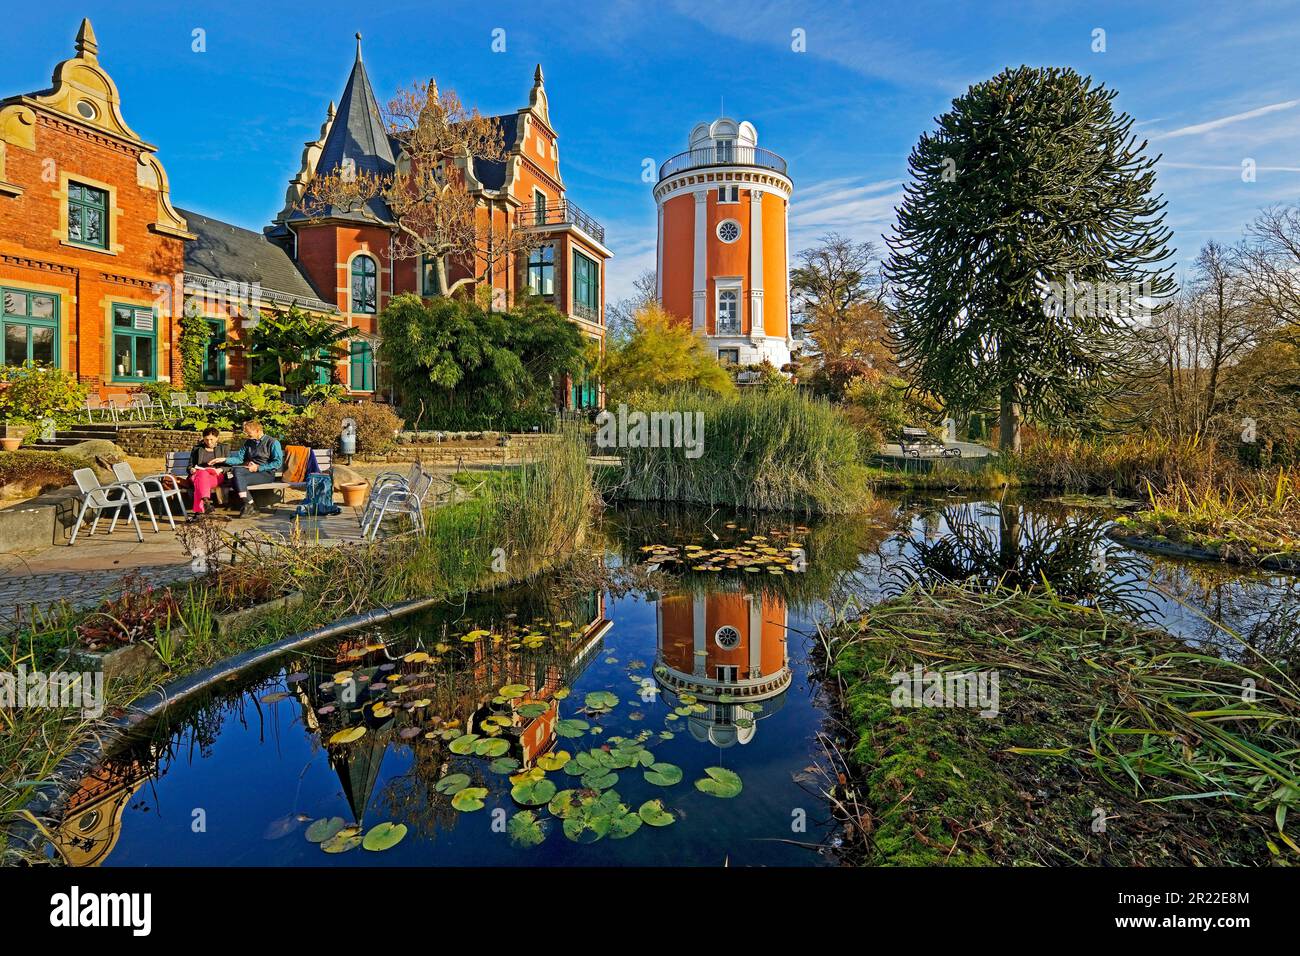 Botanical garden with Elise tower, Germany, North Rhine-Westphalia, Bergisches Land, Wuppertal Stock Photo